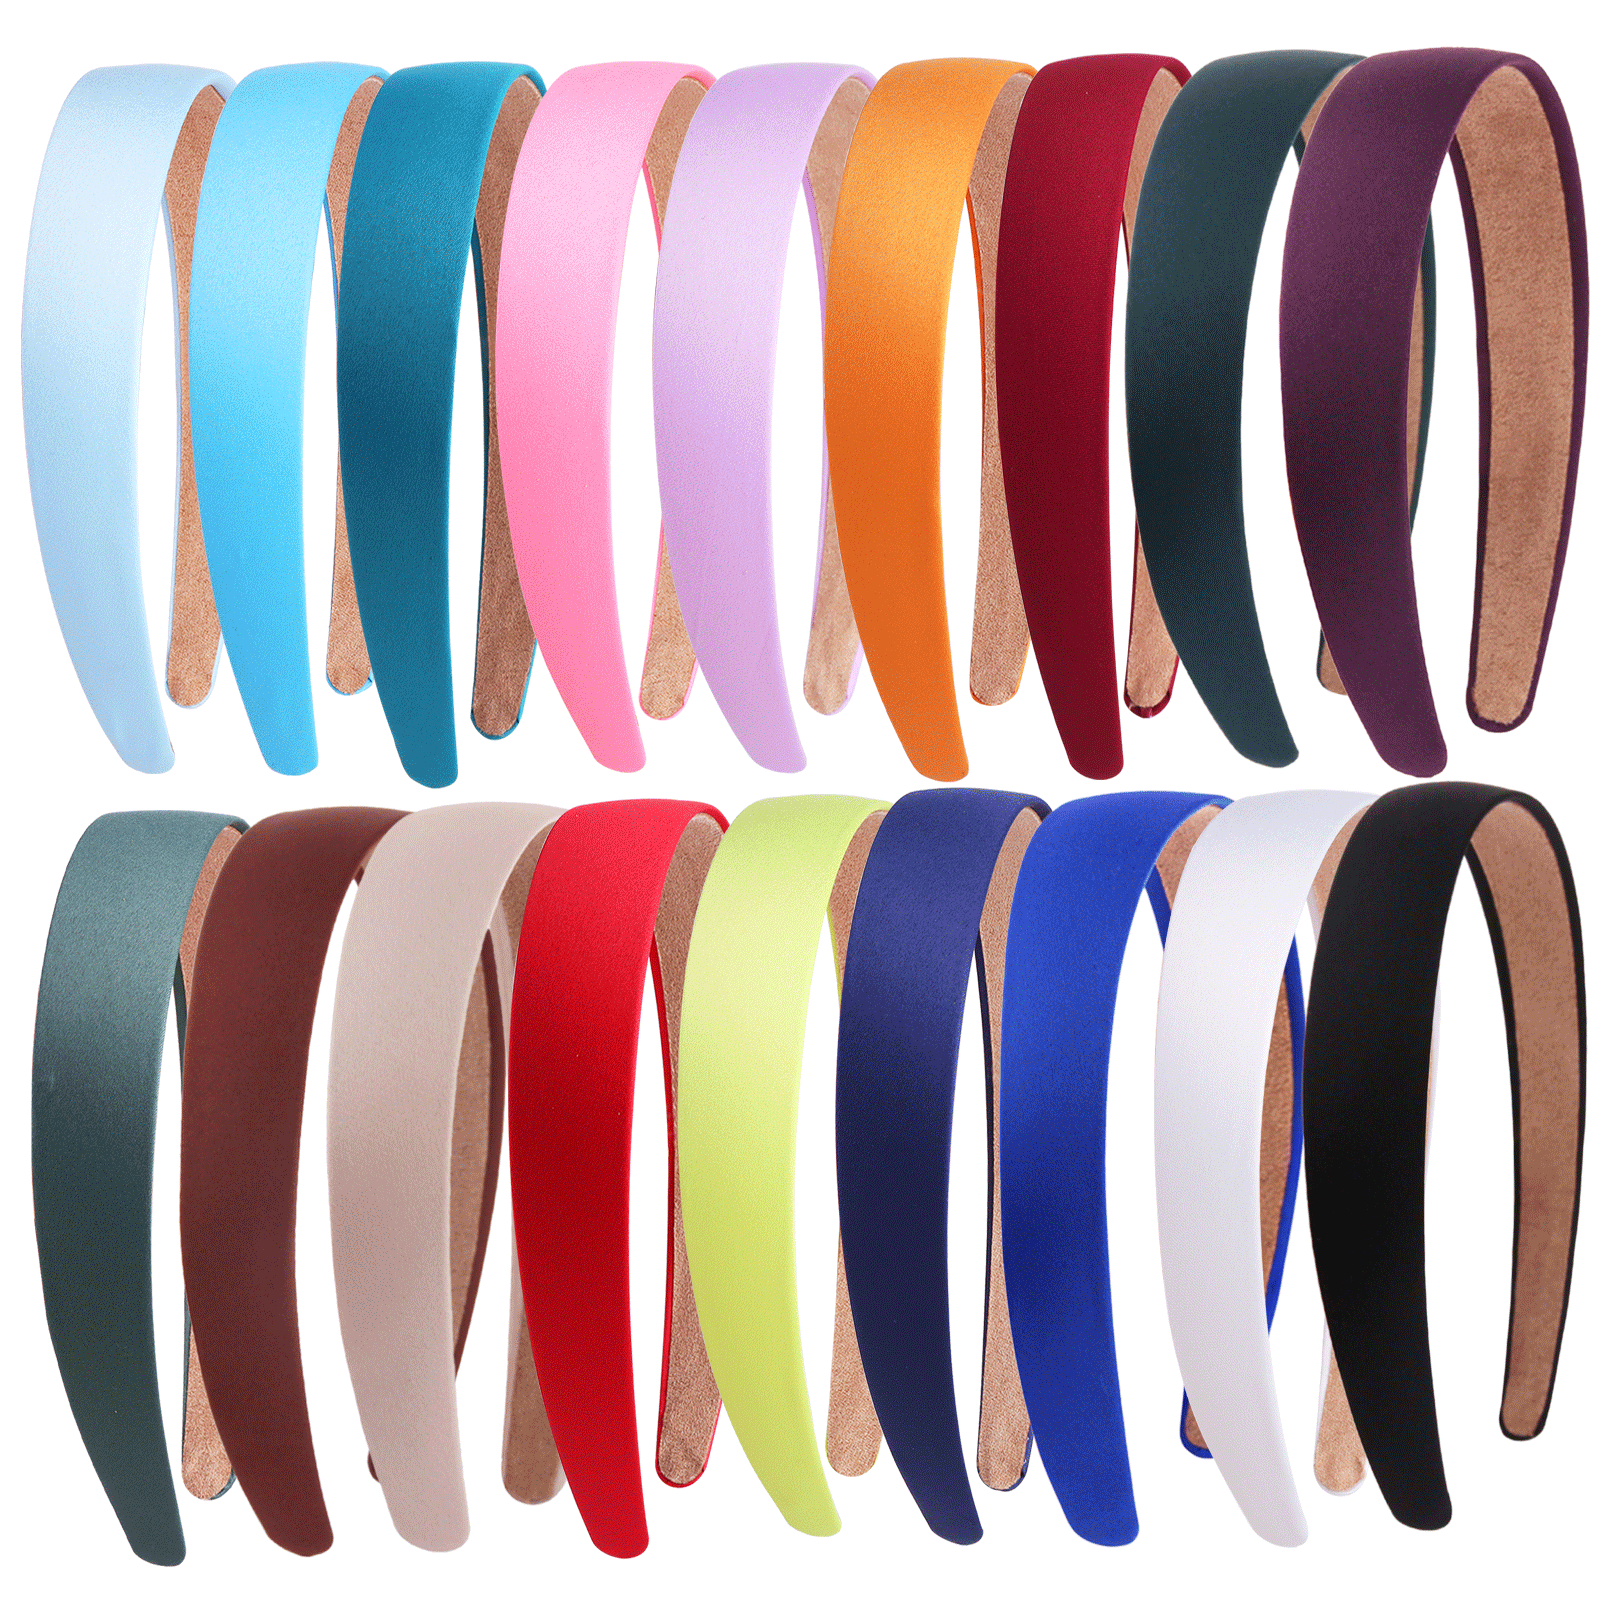 Satin Headbands 1 Inch Wide Headband Colorful Non-slip Hard Headbands for Women